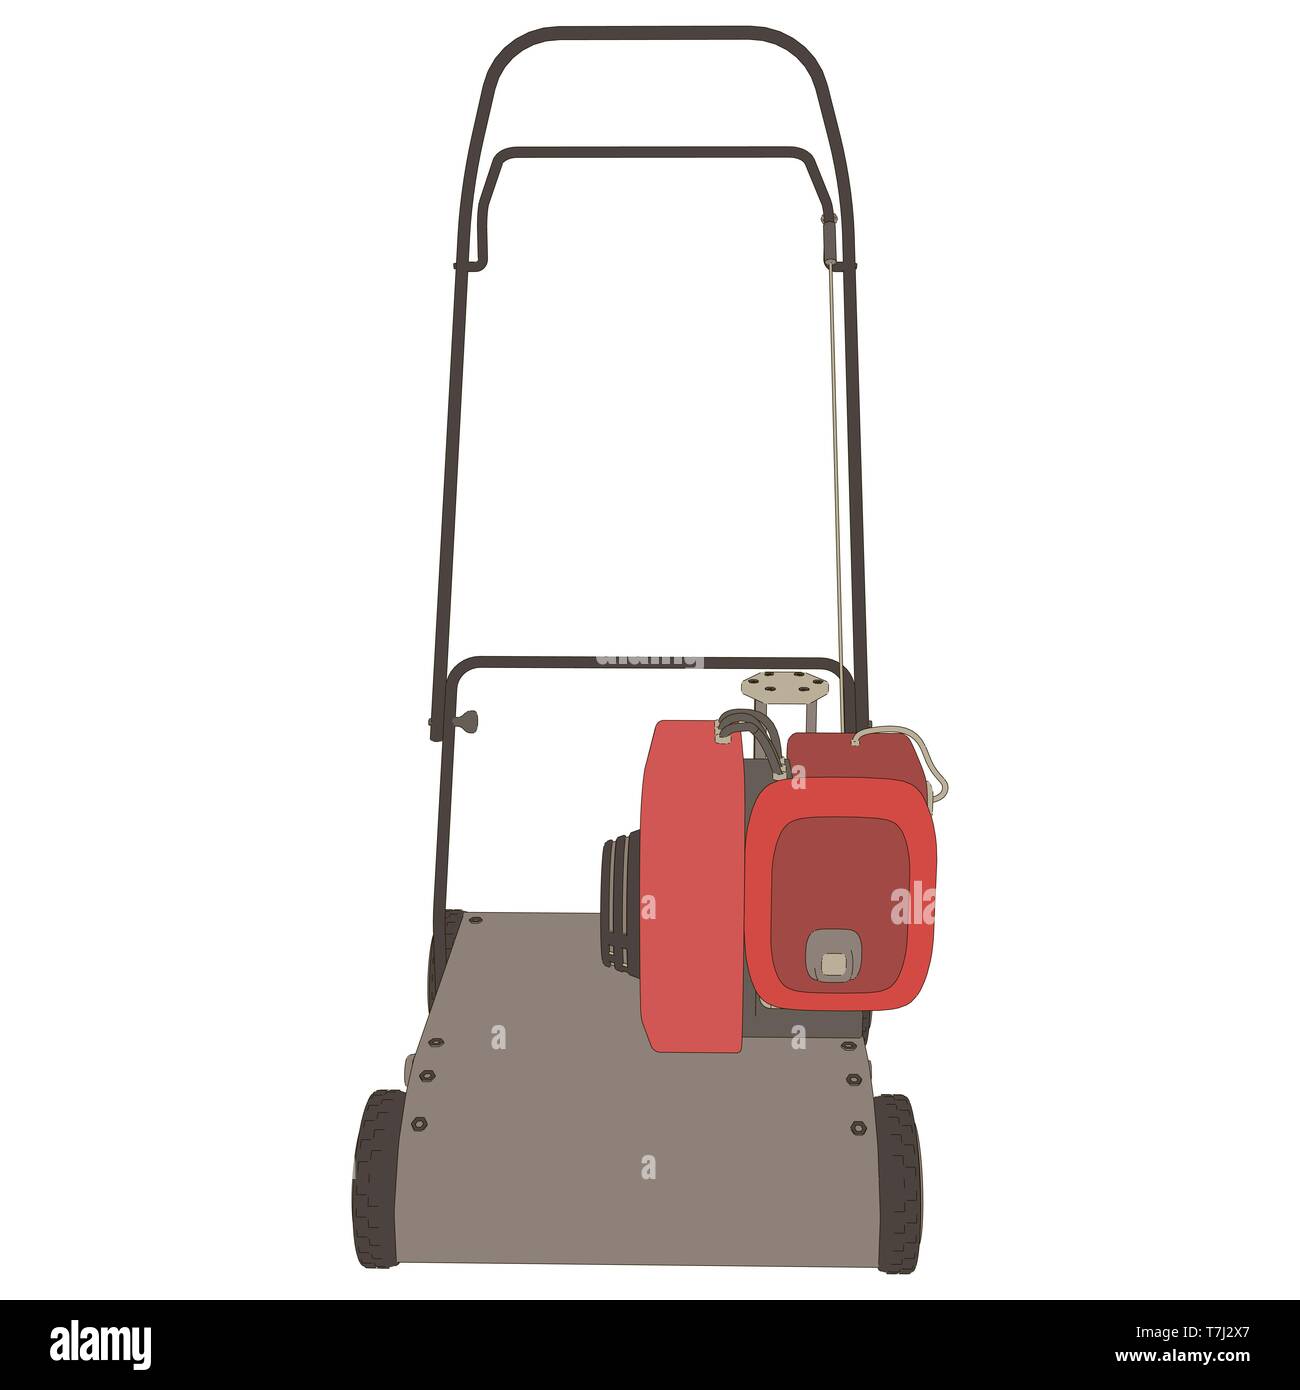 Lawn mower icon vector grass gardening mowing garden illustration equipment riding tool symbol Stock Vector